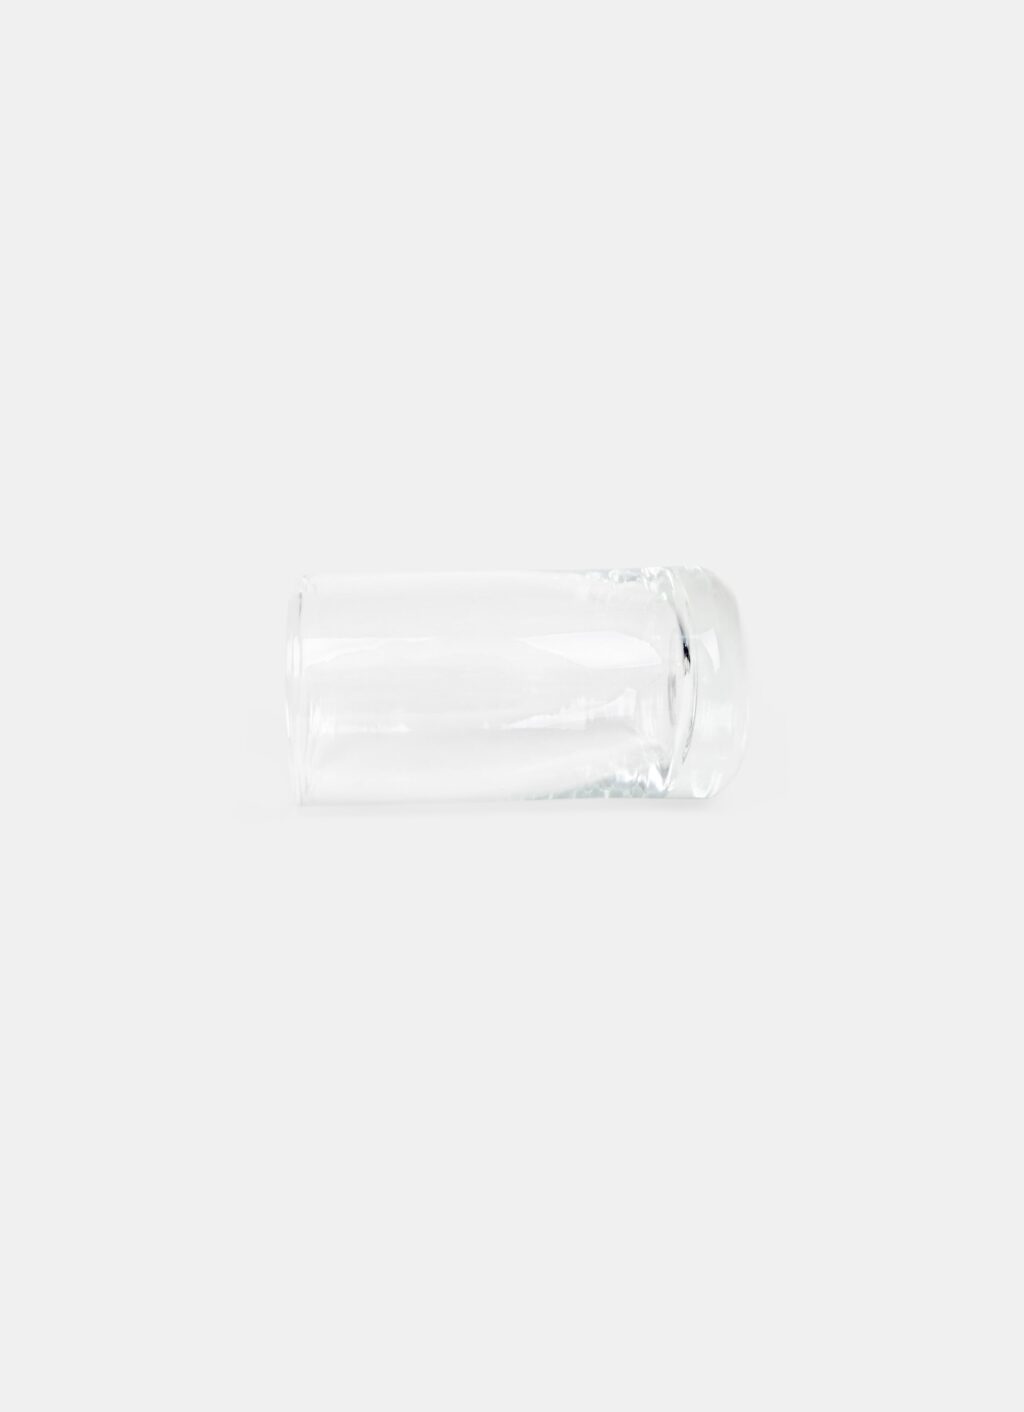 Frama - Glassware - Studio 0405 - Glass - Medium